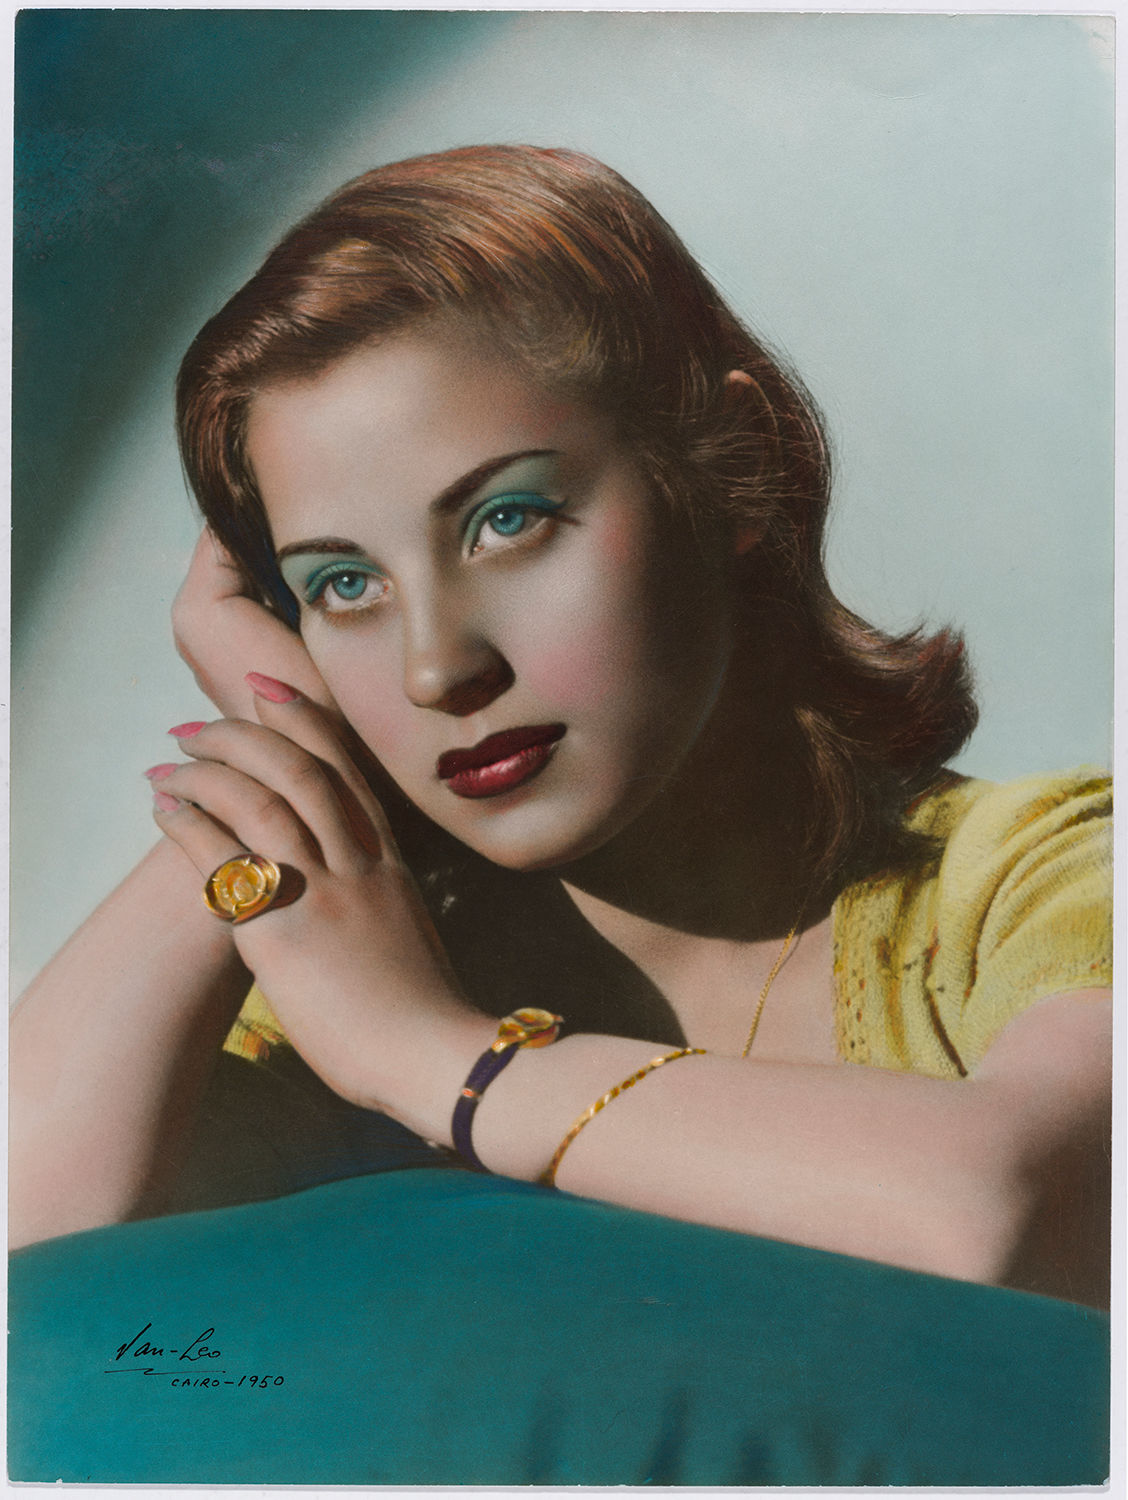 Van Leo, Miss Iliana. Italian. Hands on side of face, 1950